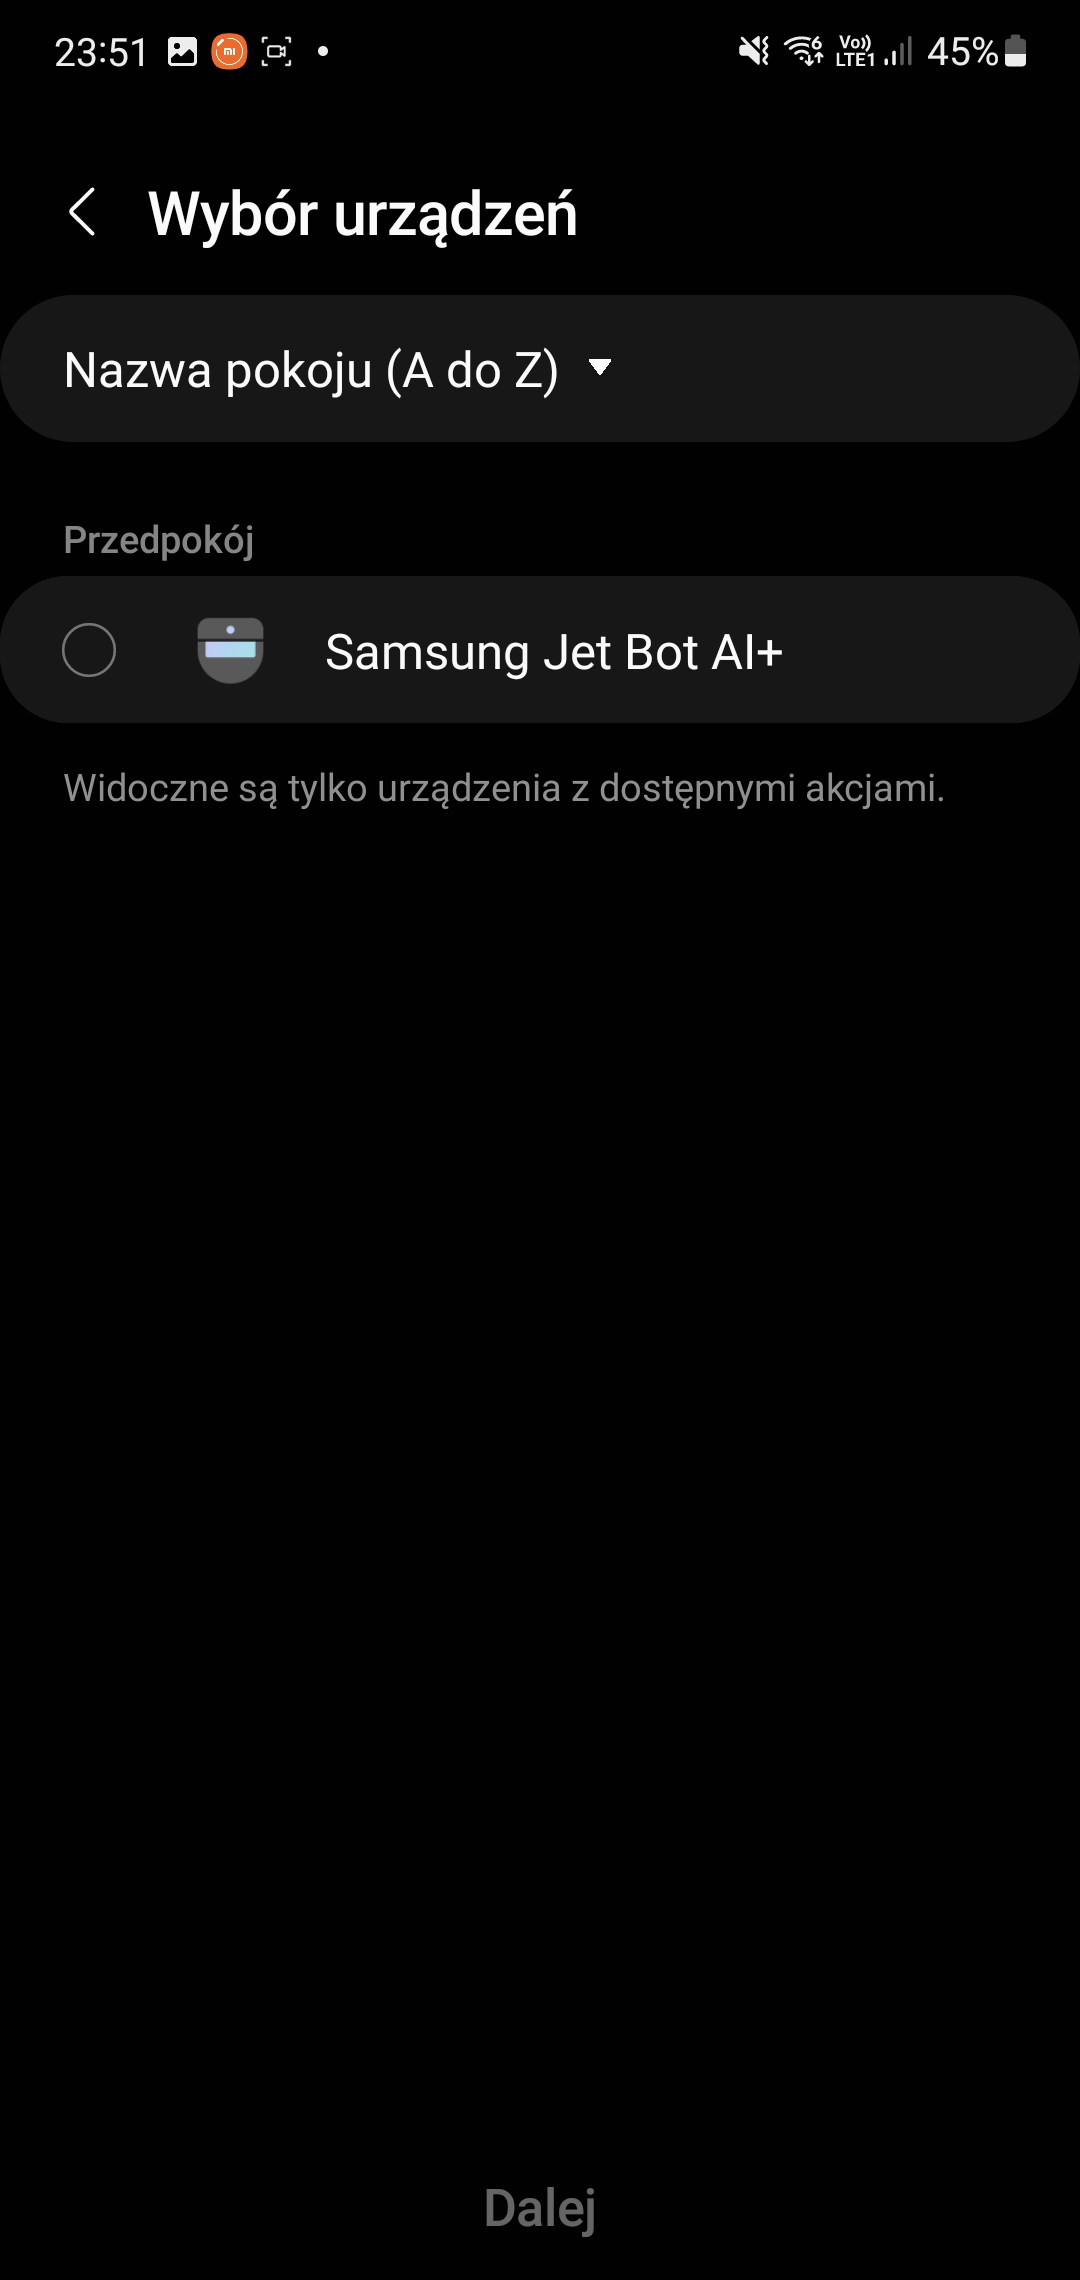 Samsung Jet Bot AI+ / fot. Kacper Żarski (oiot.pl)